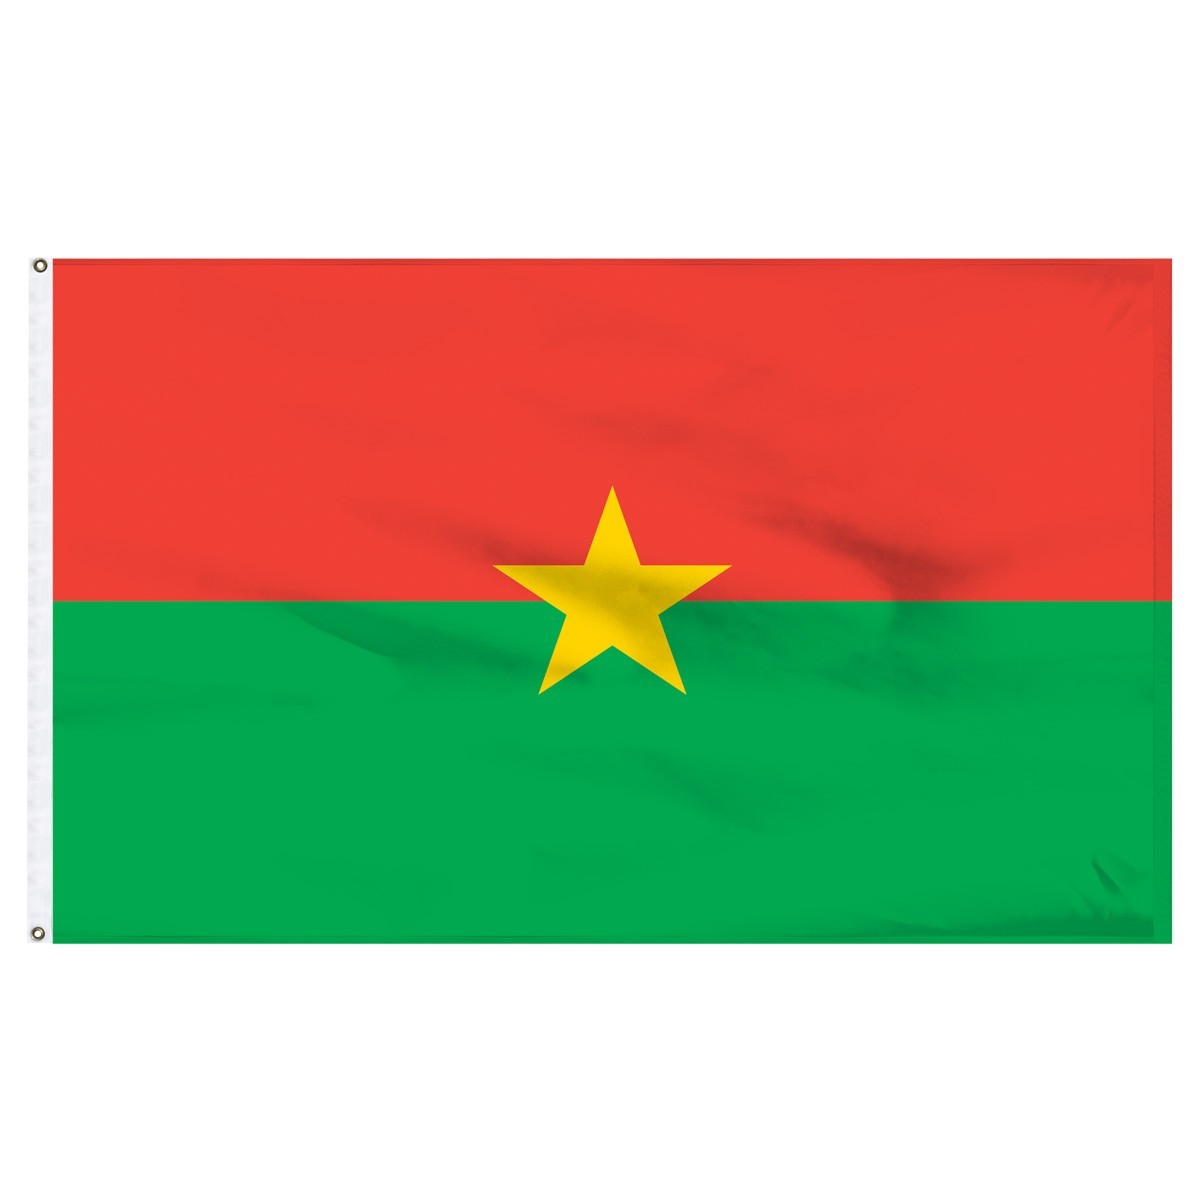 Shop Burkina Faso flags for sale